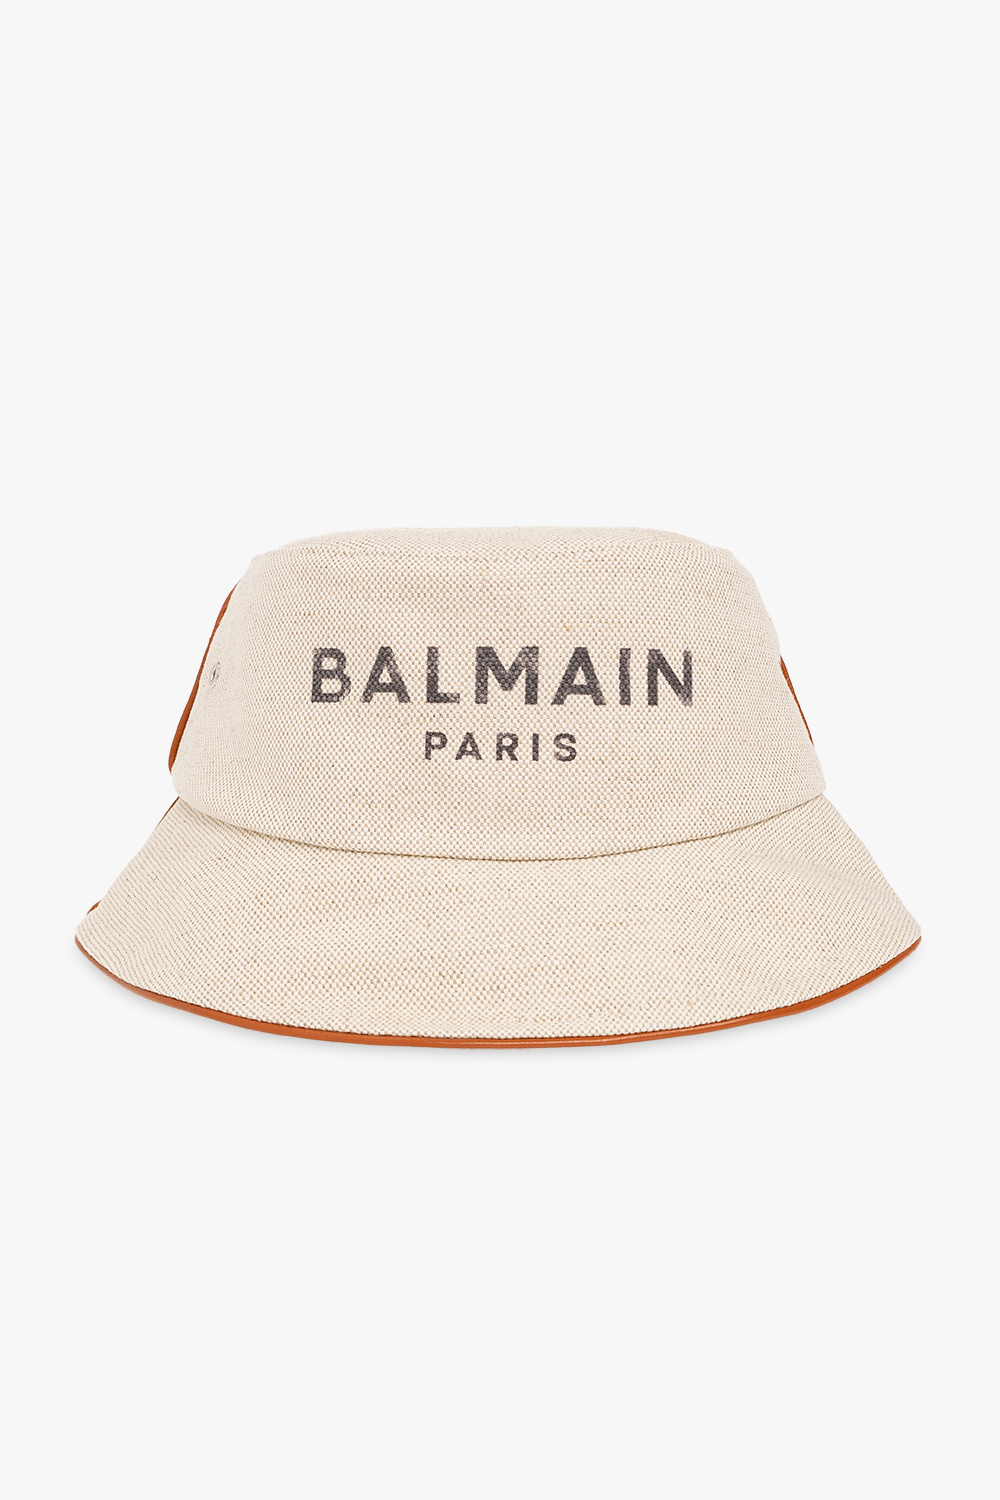 IetpShops Mali - Cream Bucket hat our with logo Balmain - Tommy Jeans Small Flag  Denim Kid's Bucket Hat